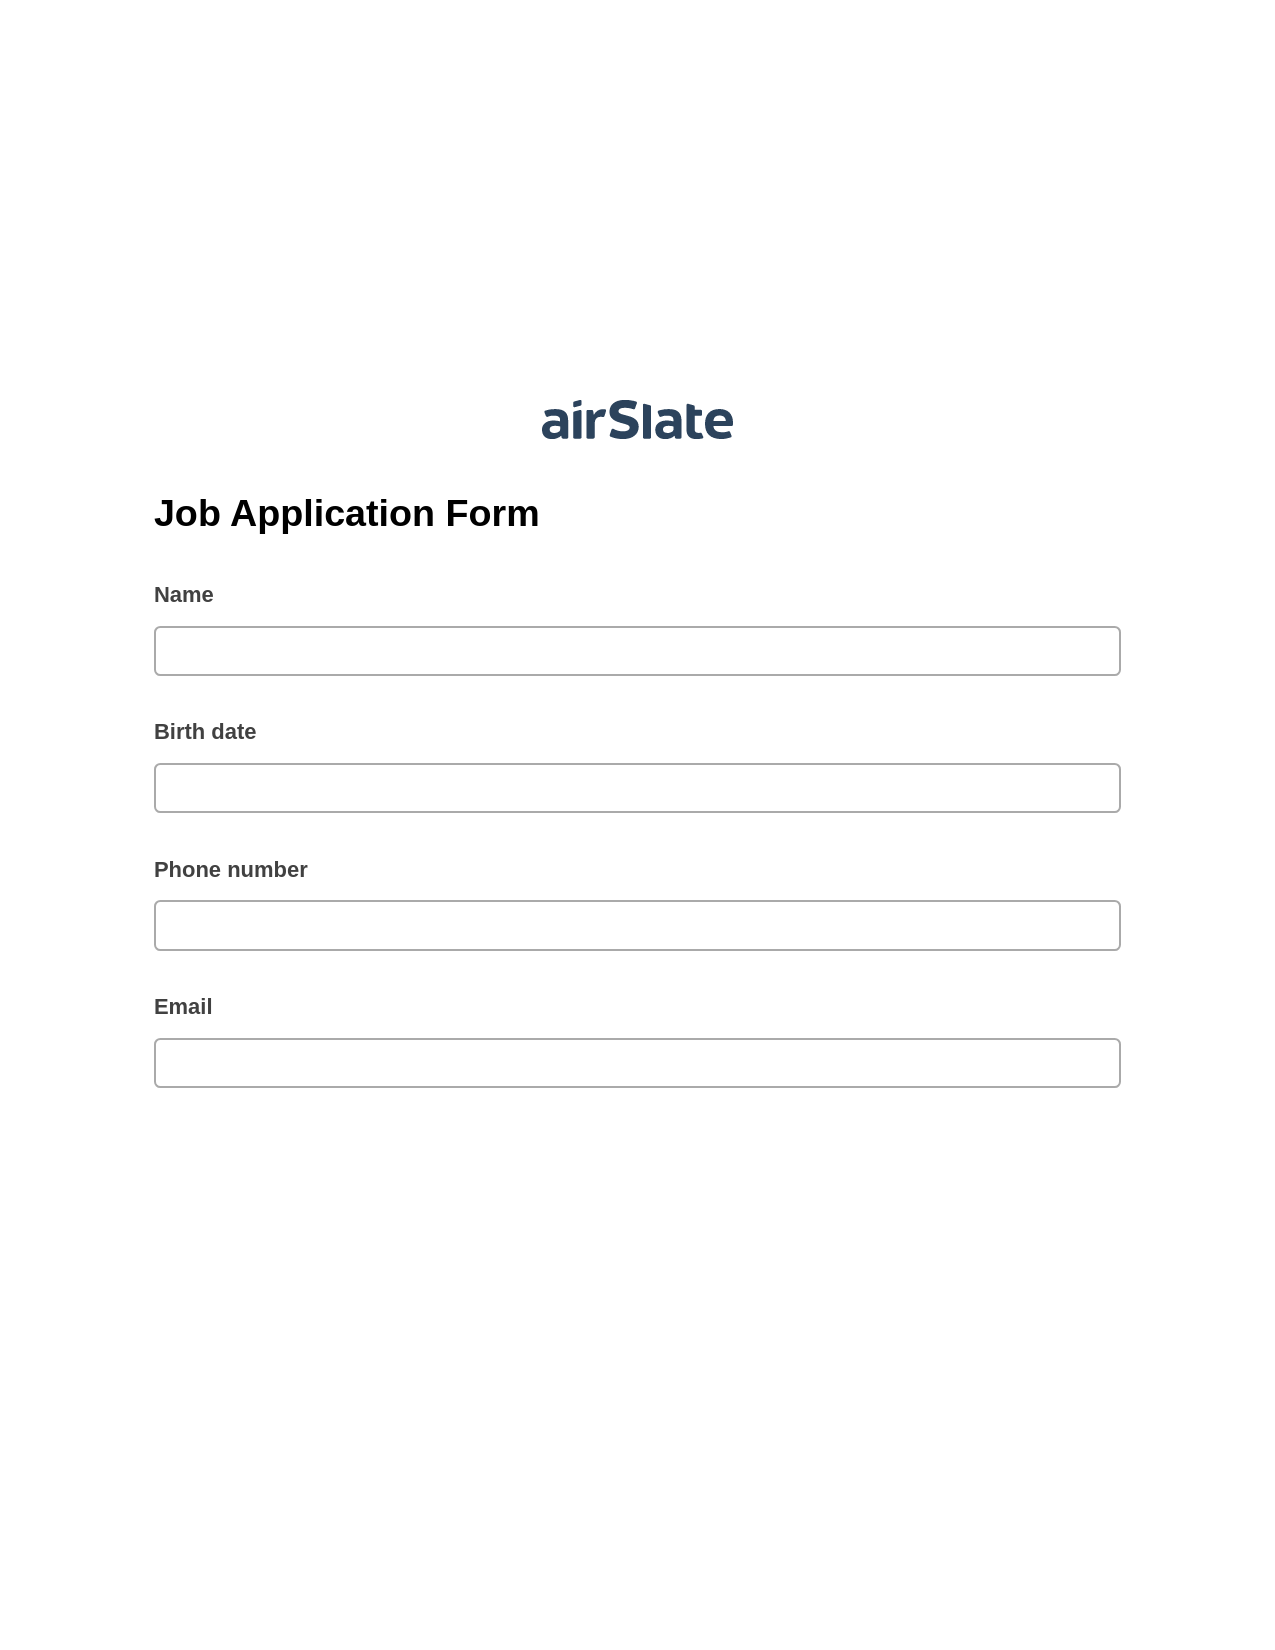 Job Application Form Pre-fill Slate from MS Dynamics 365 Records Bot, SendGrid send Campaign bot, OneDrive Bot